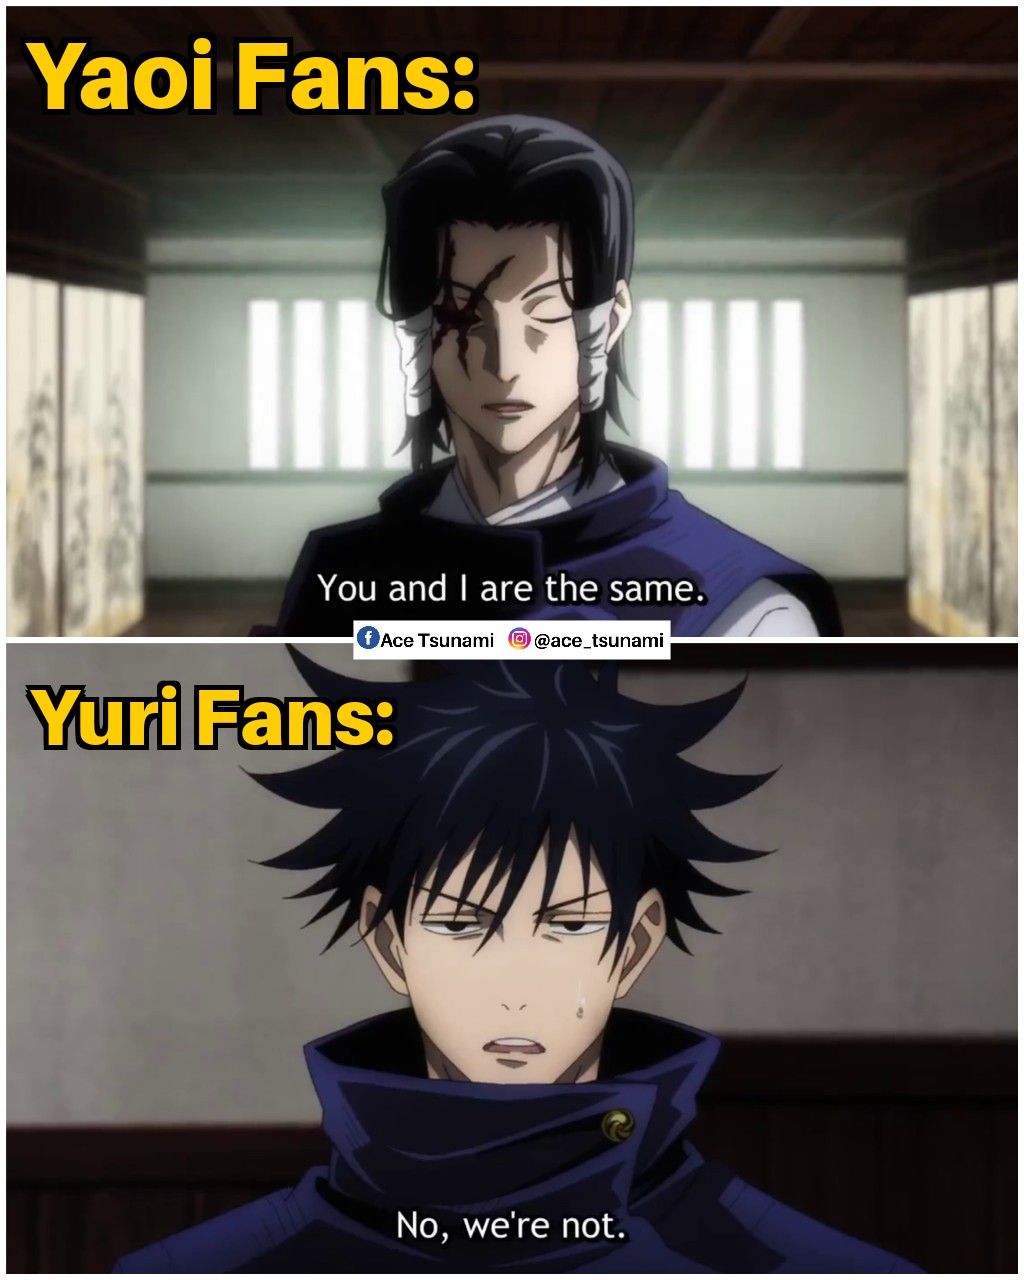 Personally I feel many franchises have more Yaoi ships than Yuri.